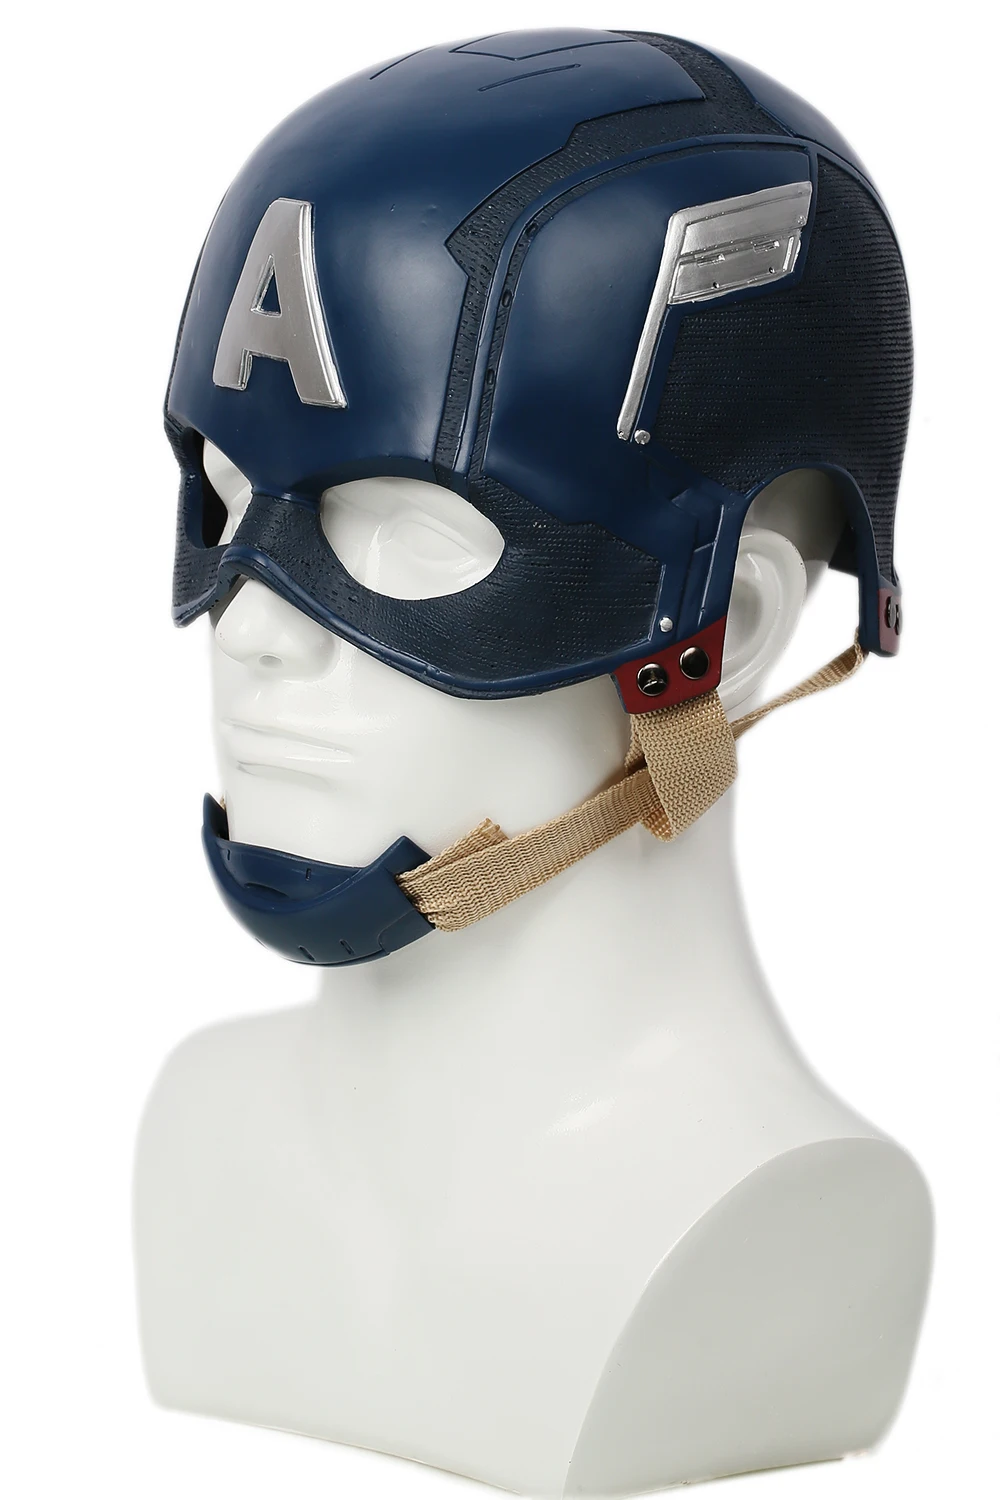 Coslive Captain America 3 Masko Državljanske Vojne Smolo Čelada Cosplay Kostum Rekviziti Film Replika Halloween Odraslih